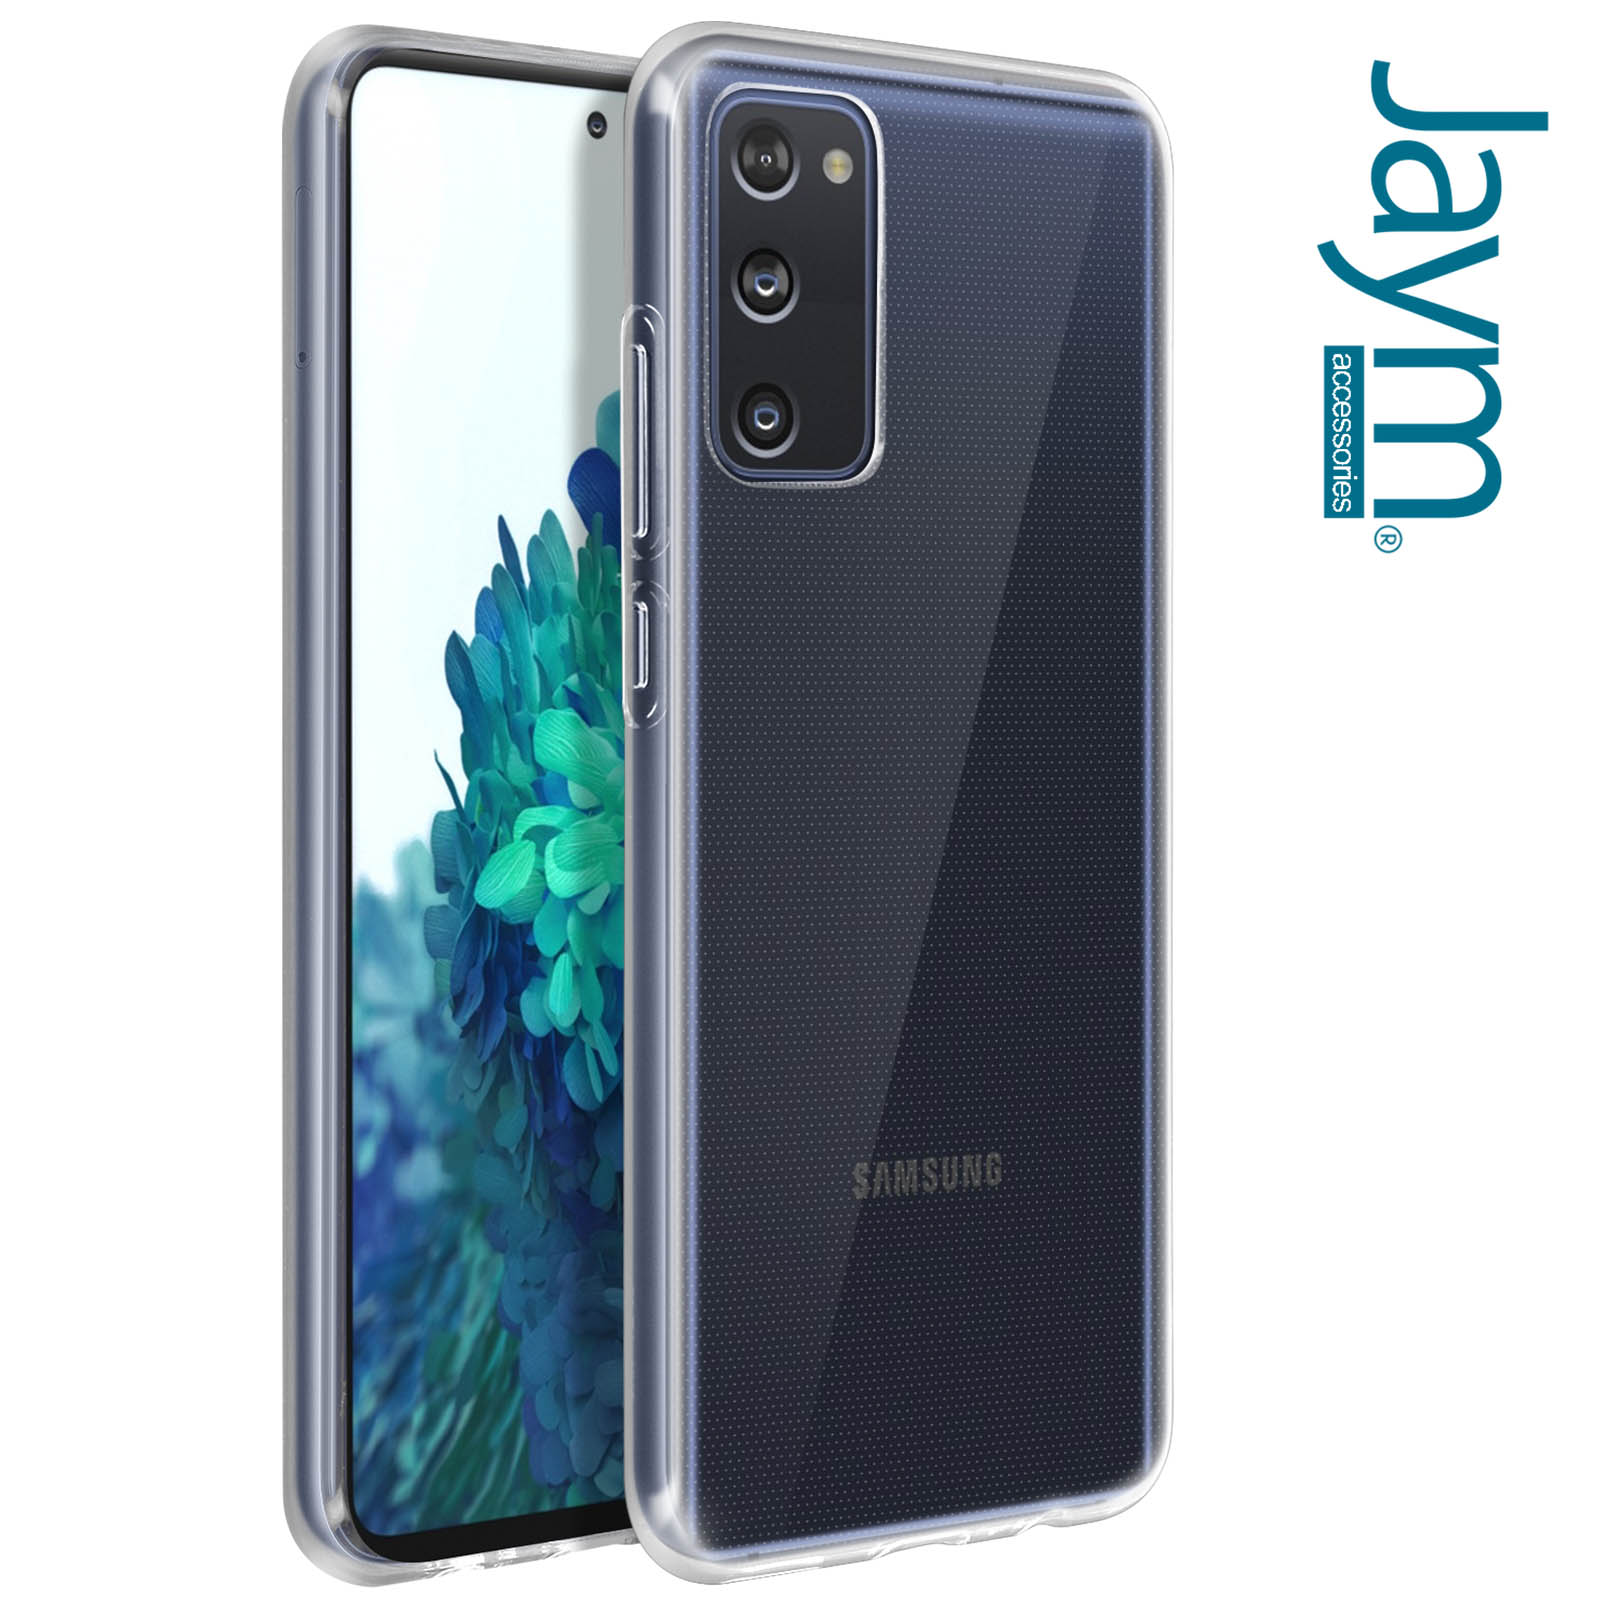 Funda Samsung Galaxy S20 Plus ultrafina (transparente) 